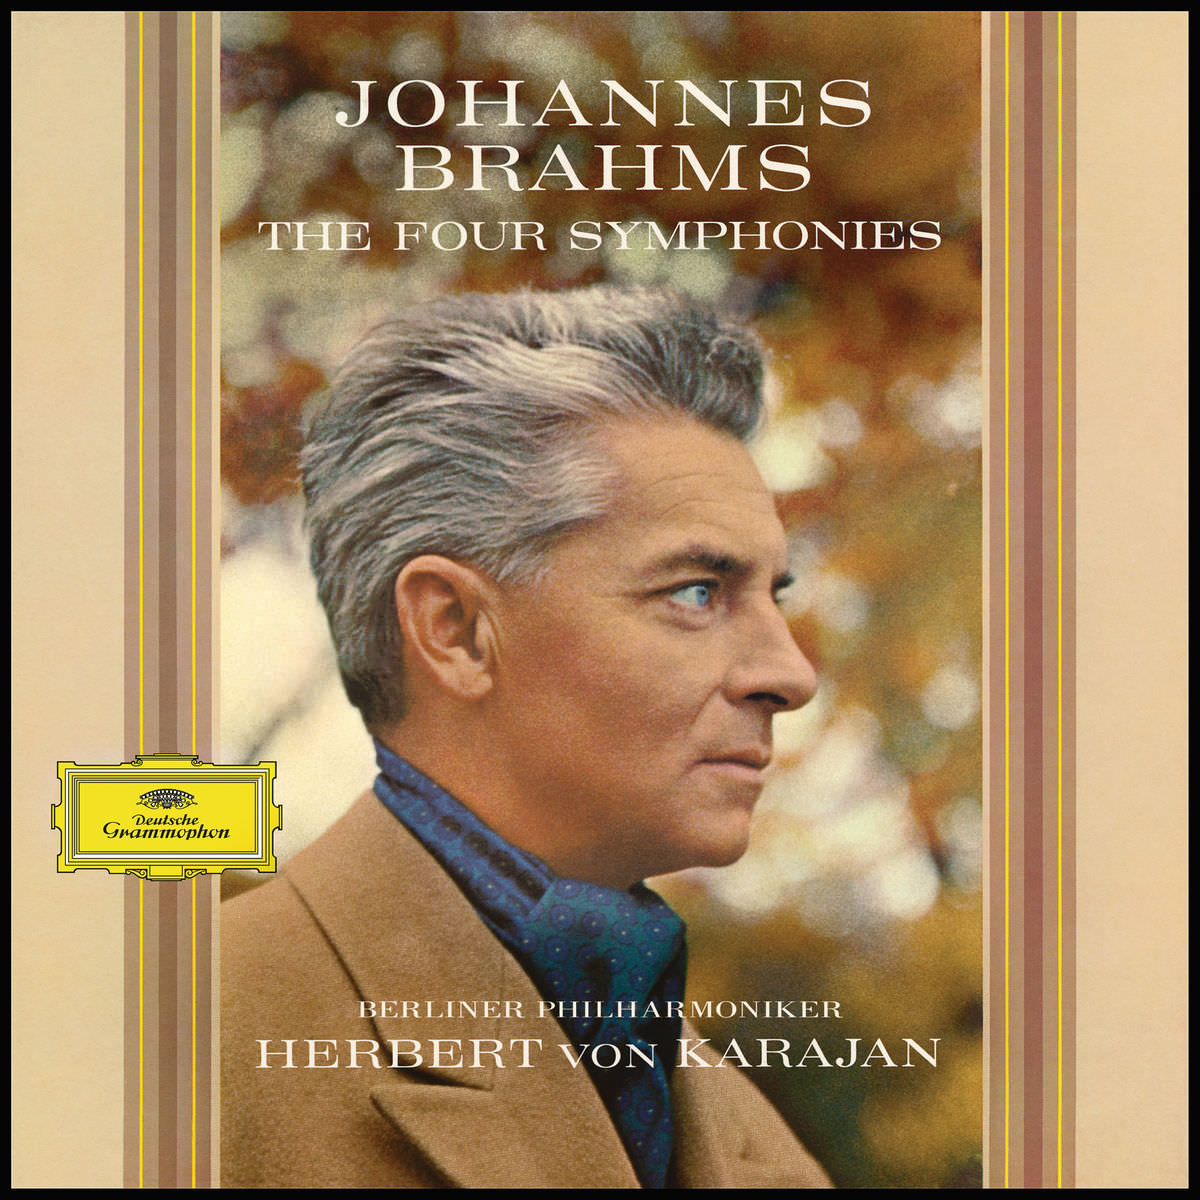 Berliner Philharmoniker & Herbert von Karajan – Brahms: The Four Symphonies (1965/2017) [FLAC 24bit/96kHz]